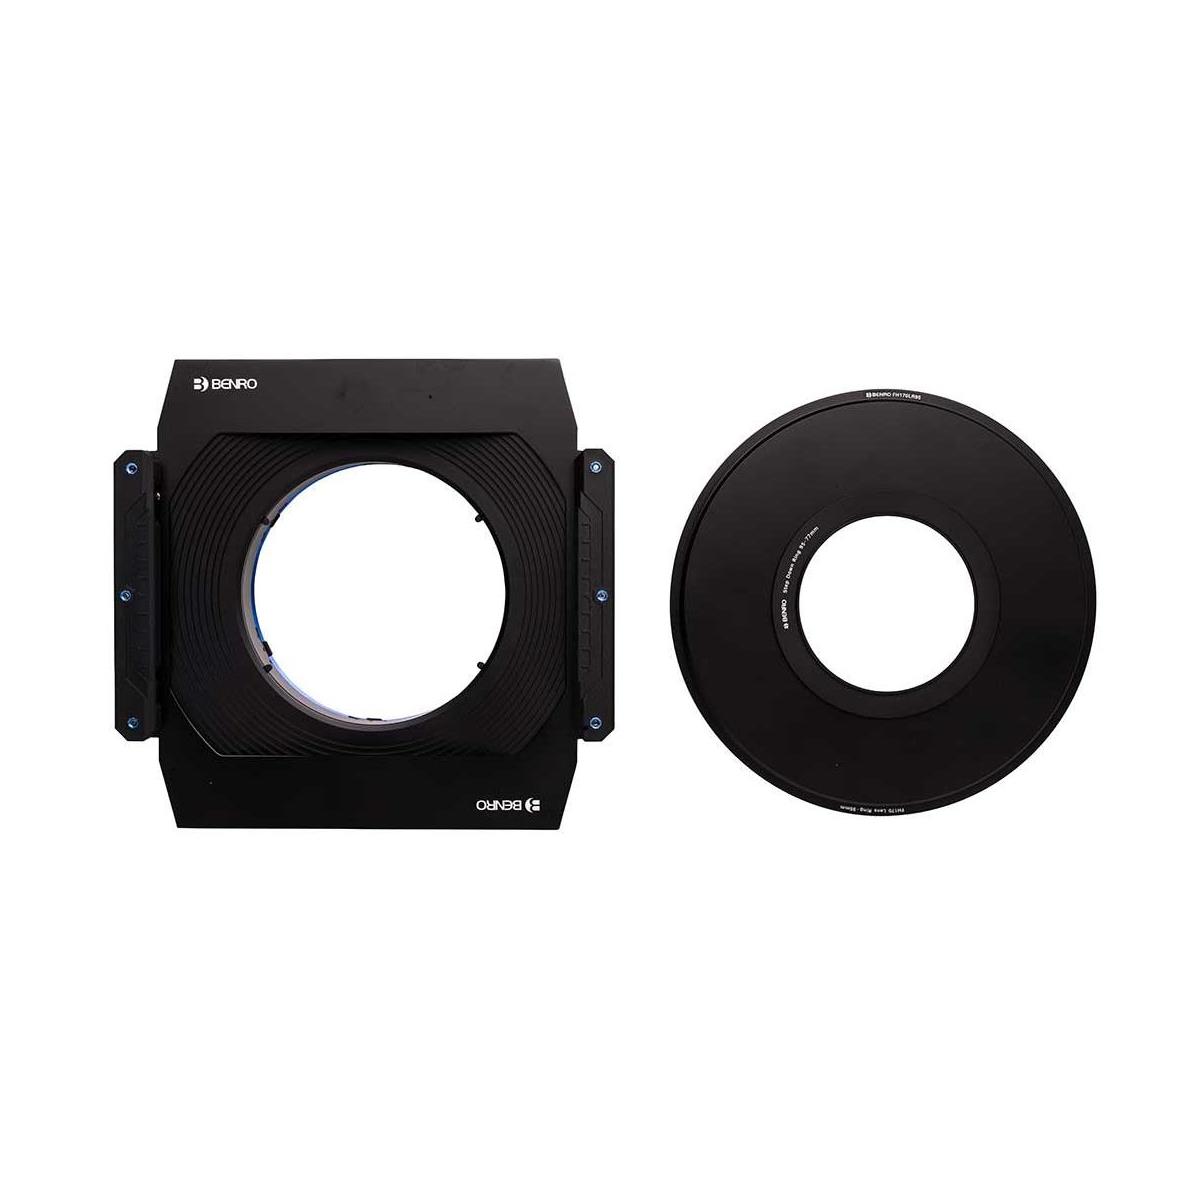 Image of Benro Master Series FH170R95 170mm Filter Holder for Canon 11-24mm f/4L USM Lens